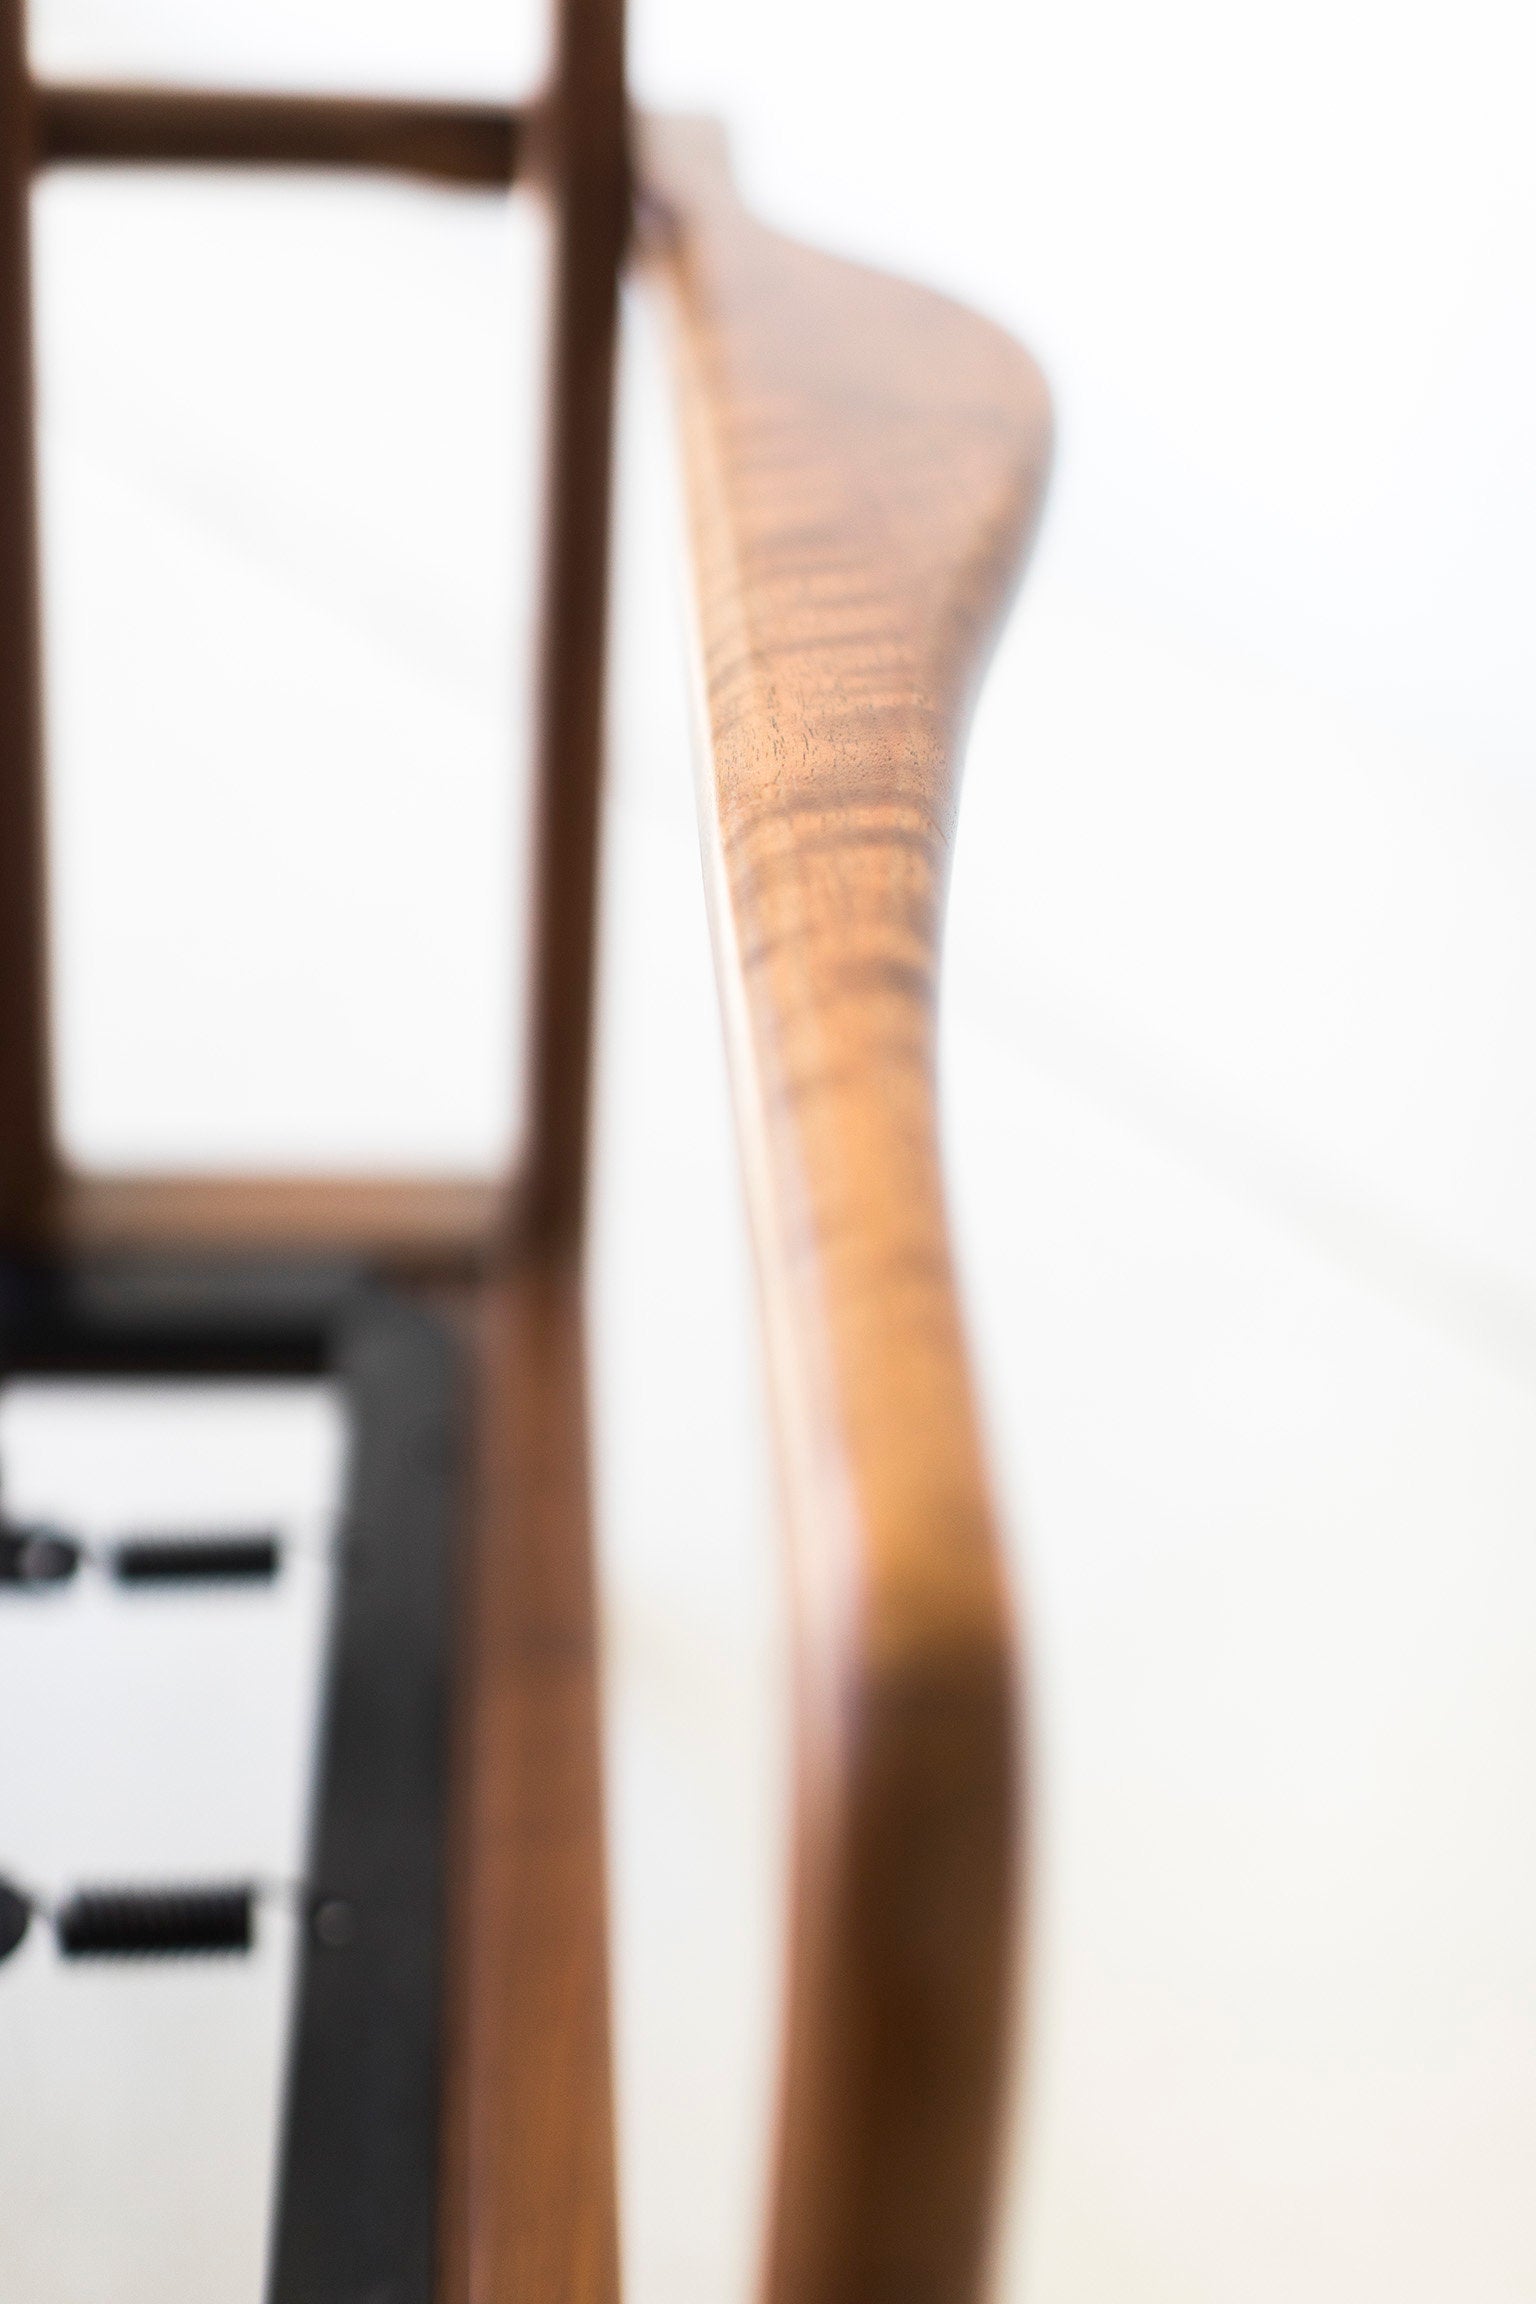 Mel Smilow Lounge Chair and Ottoman for Smilow-Thielle - 08081701